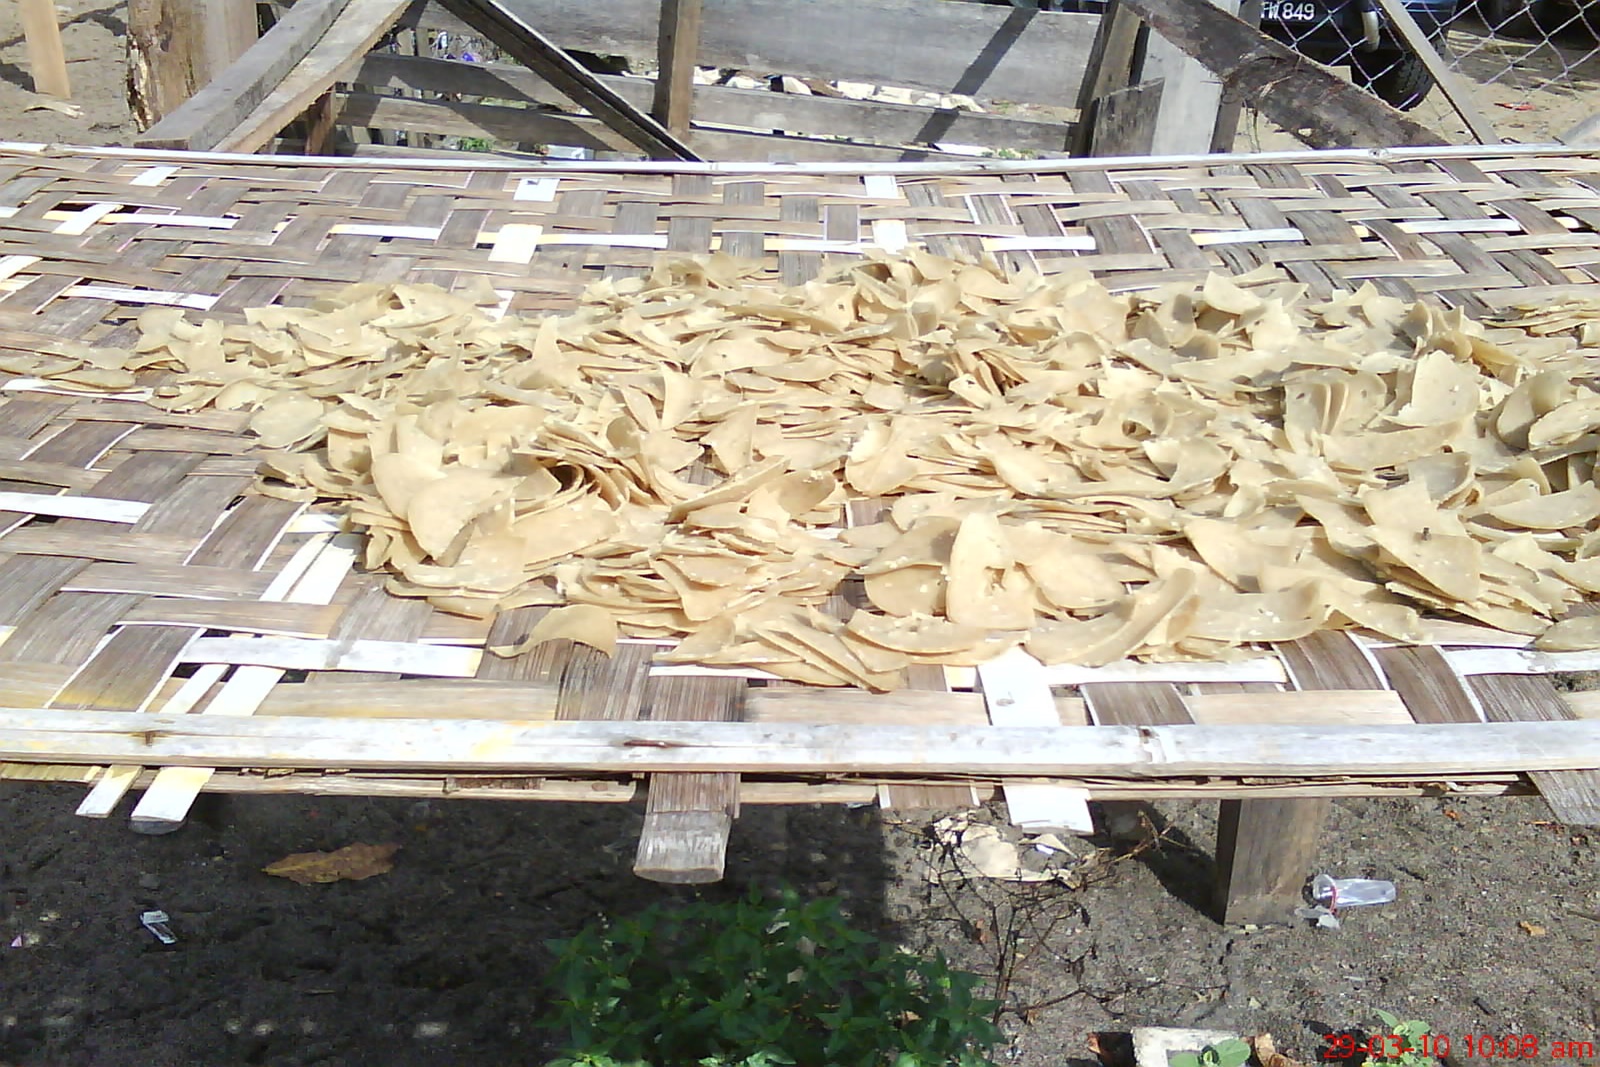 Watch the process of belacan, keropok lekor & keropok leper making.